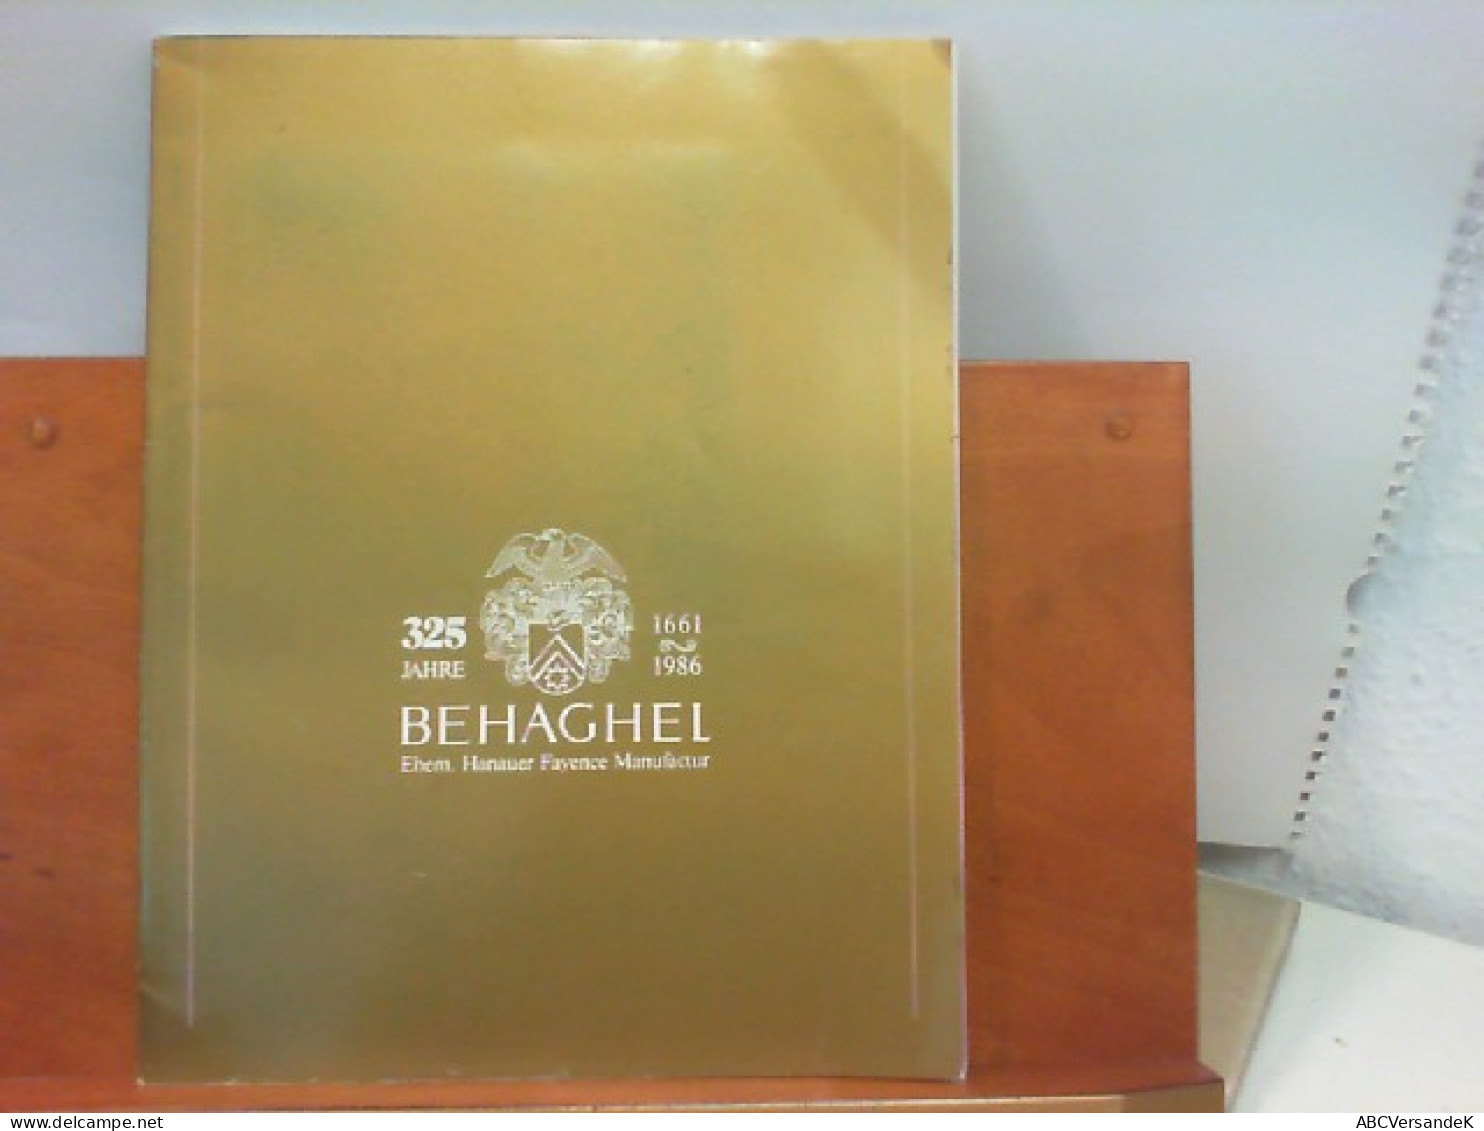 Katalog 325 Jahre Beghaghel In Frankfurt Am Main 1661 - 1986 - Technik